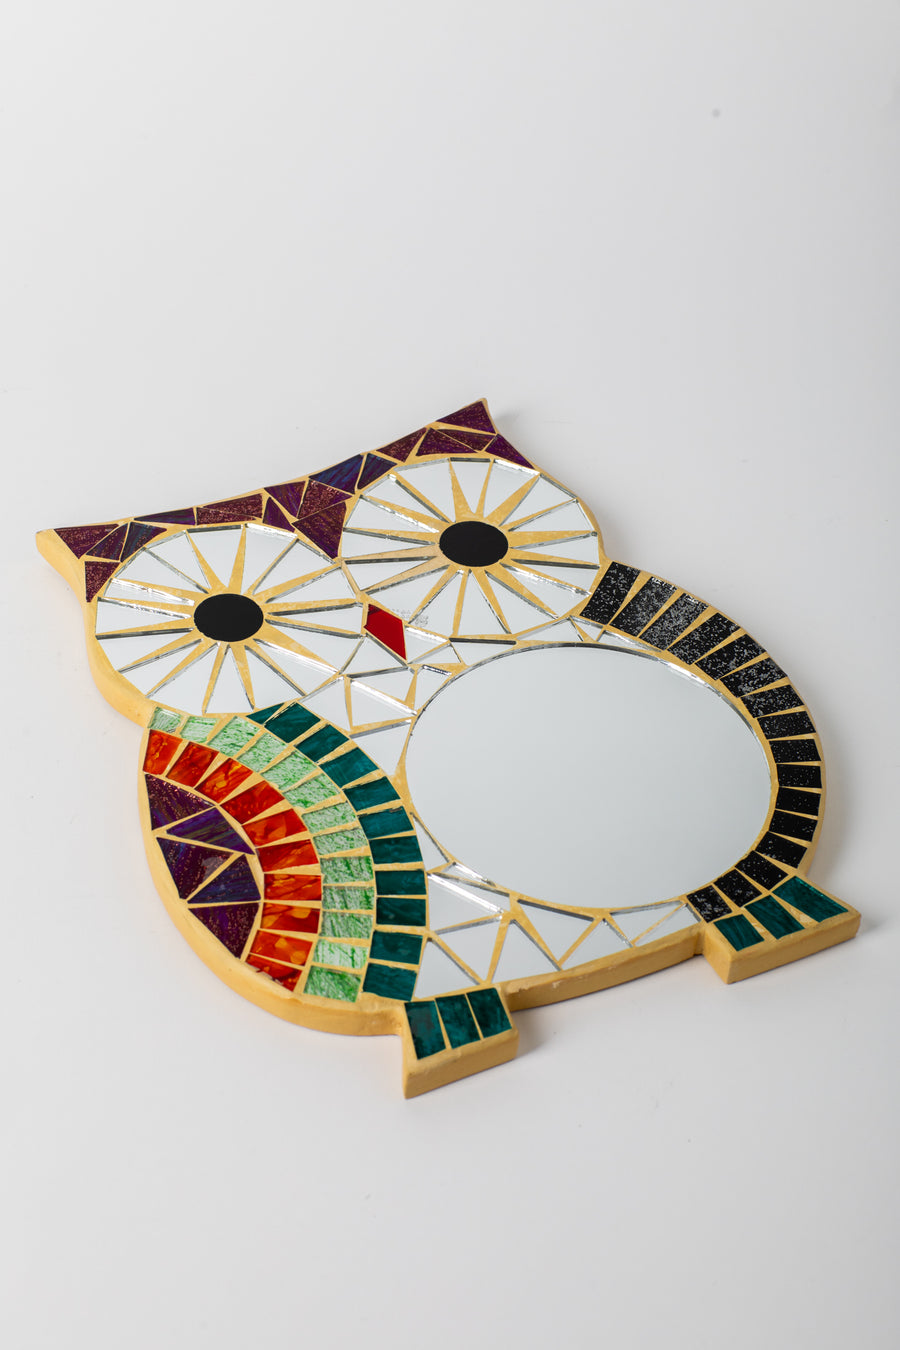 Mosaic Owl Mirror